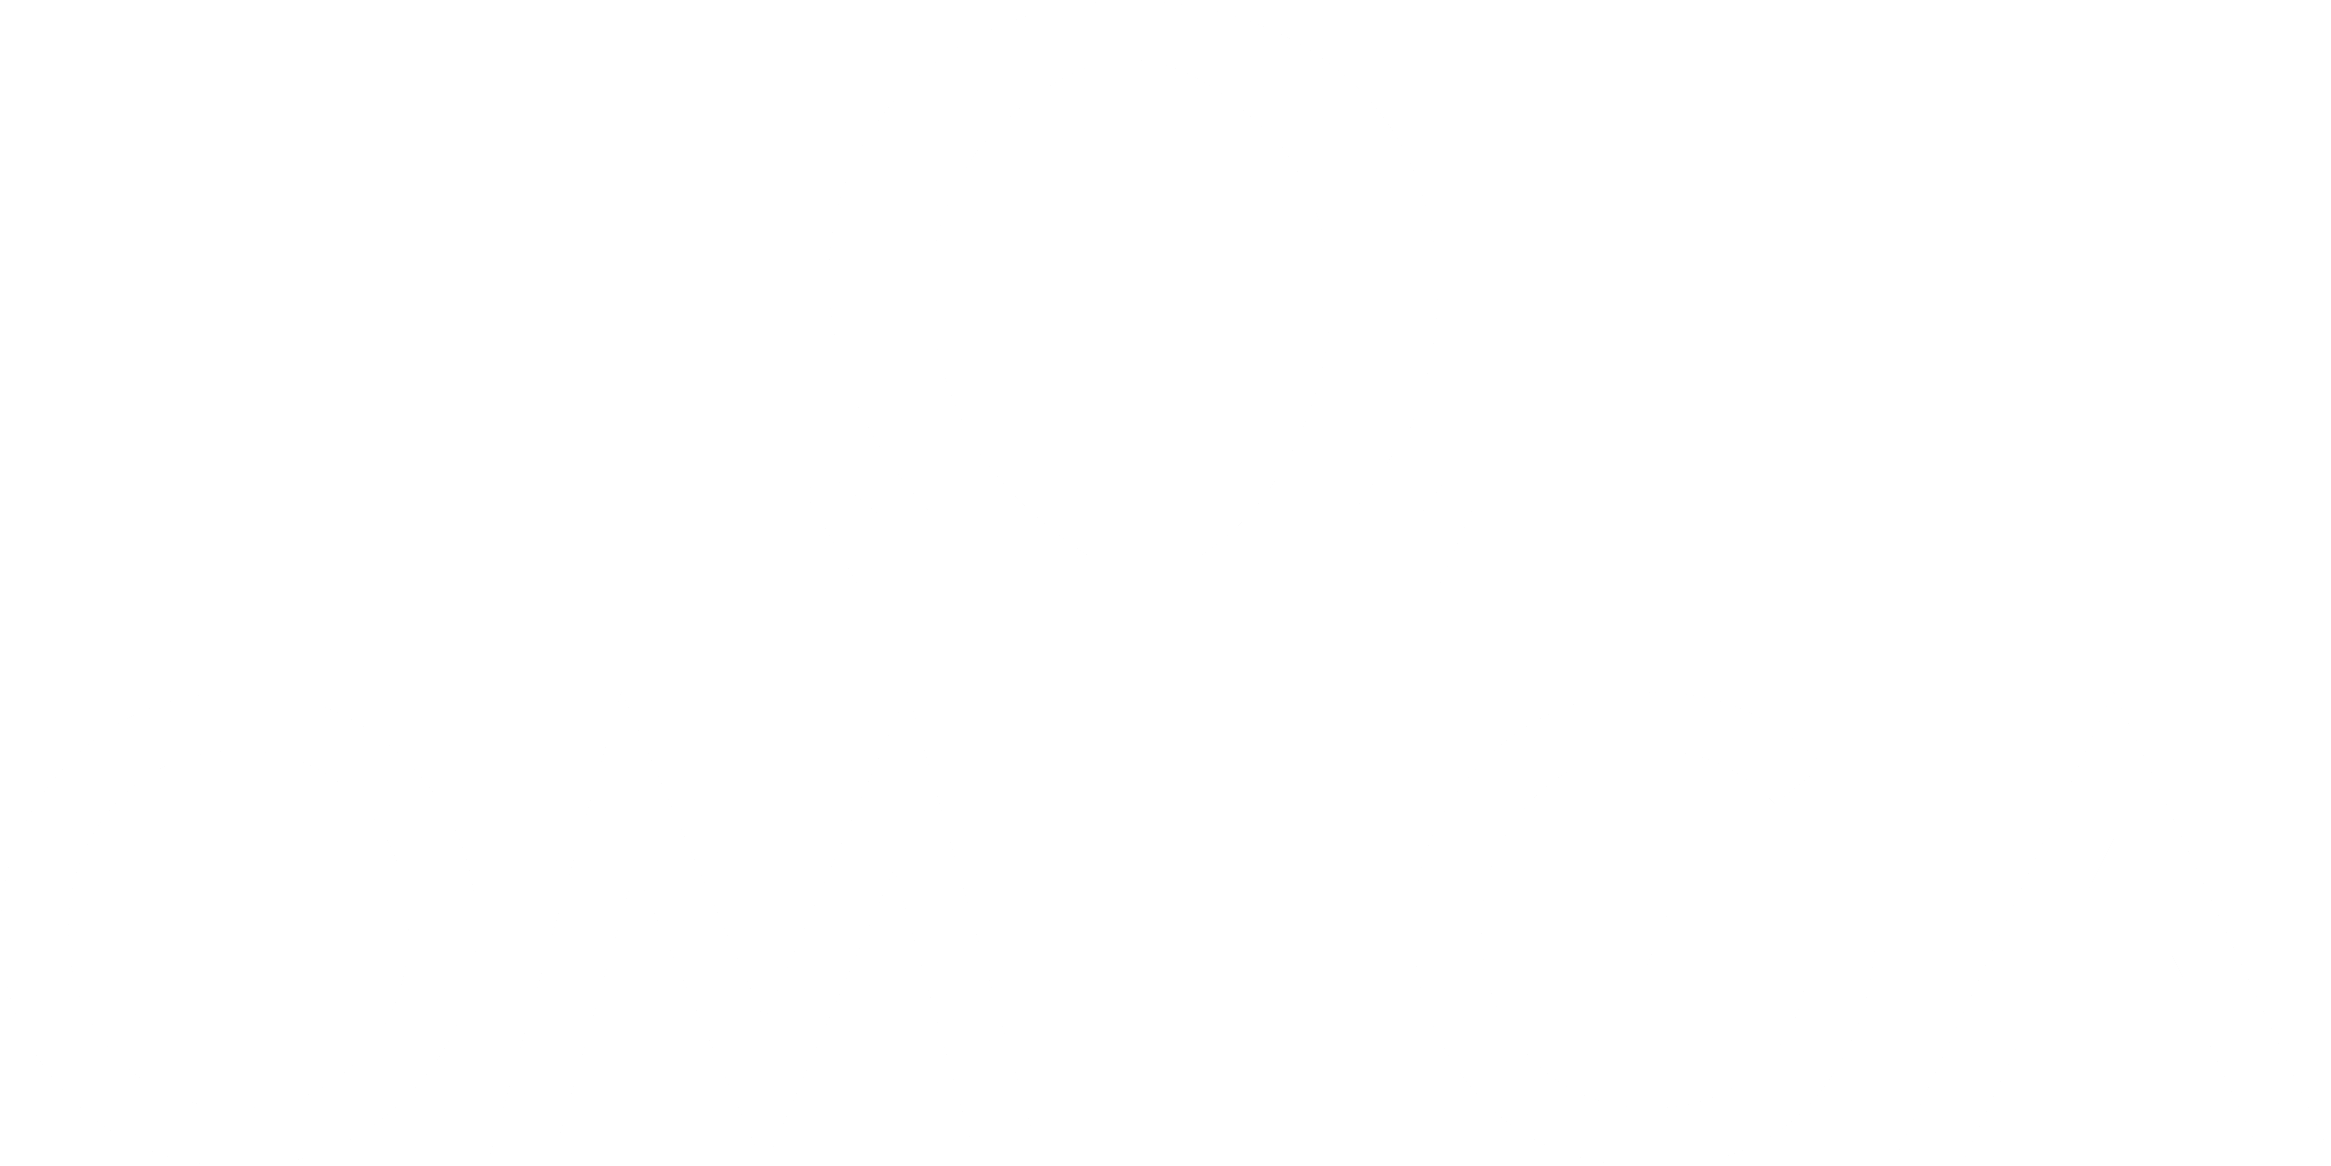 Download Omega Logo Black And White Transparent Background